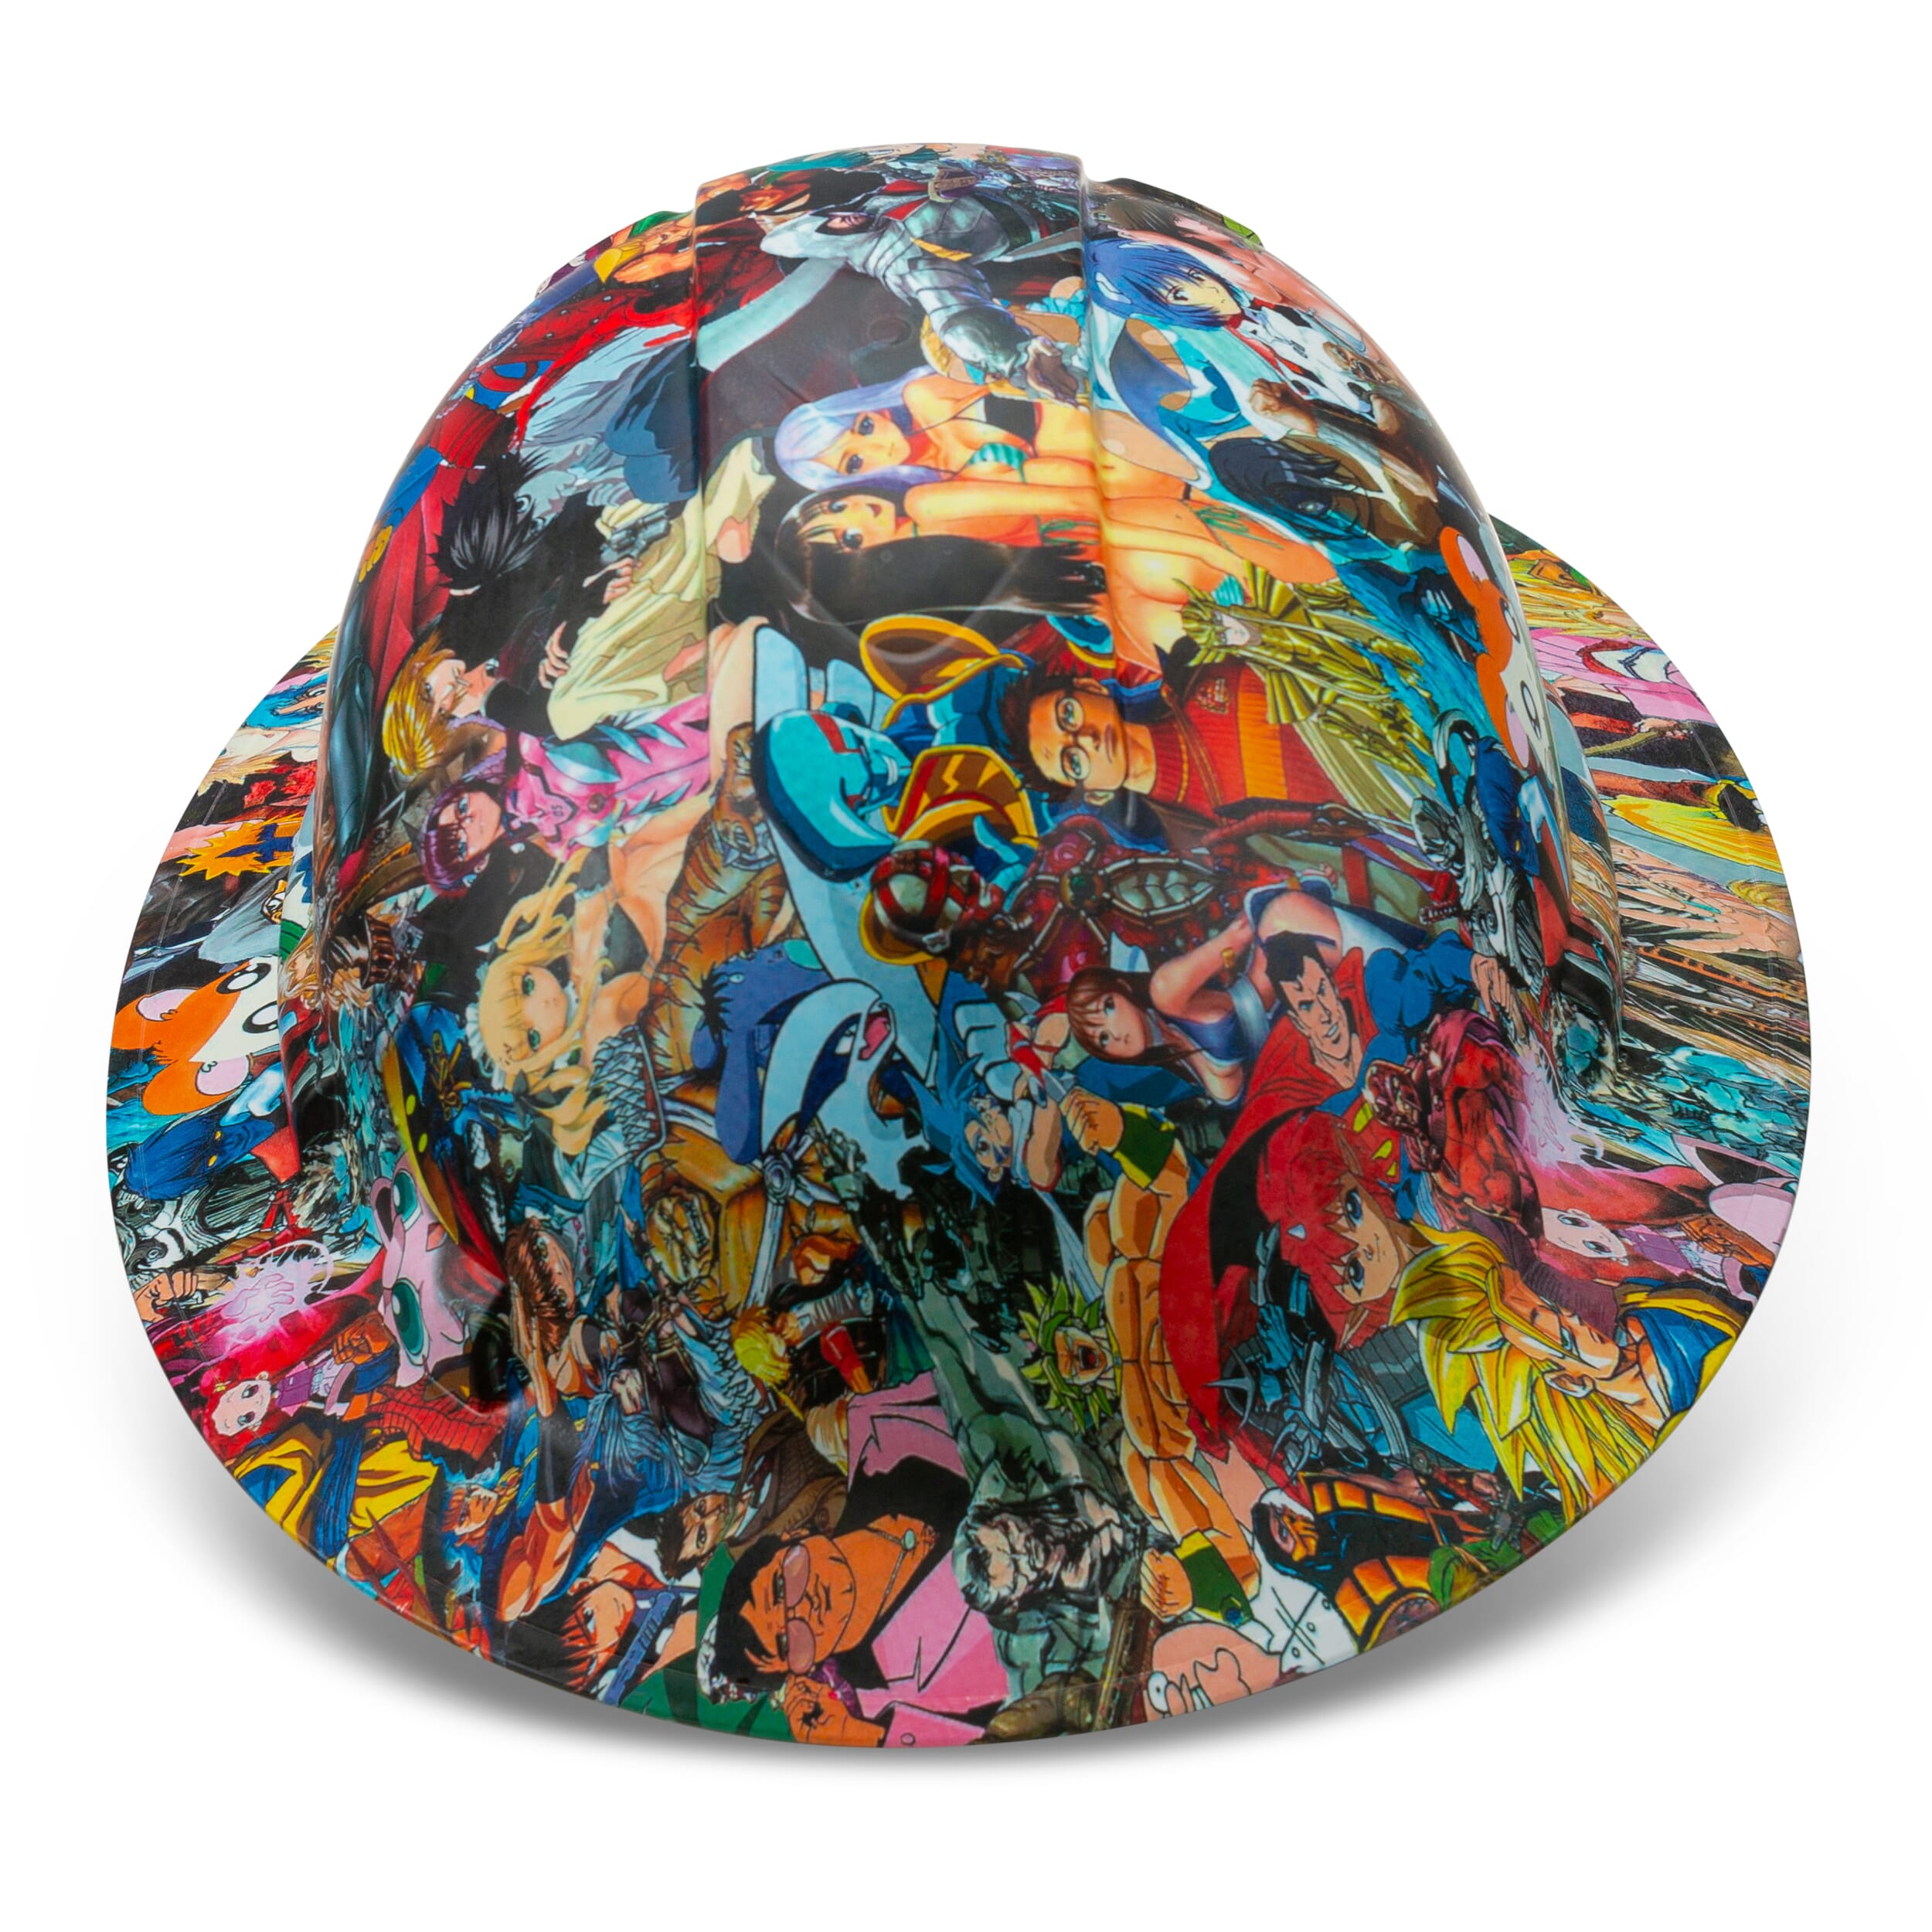 Full Brim Pyramex Hard Hat, Custom Cartoons And Character Design, Safety Helmet, 6 Point